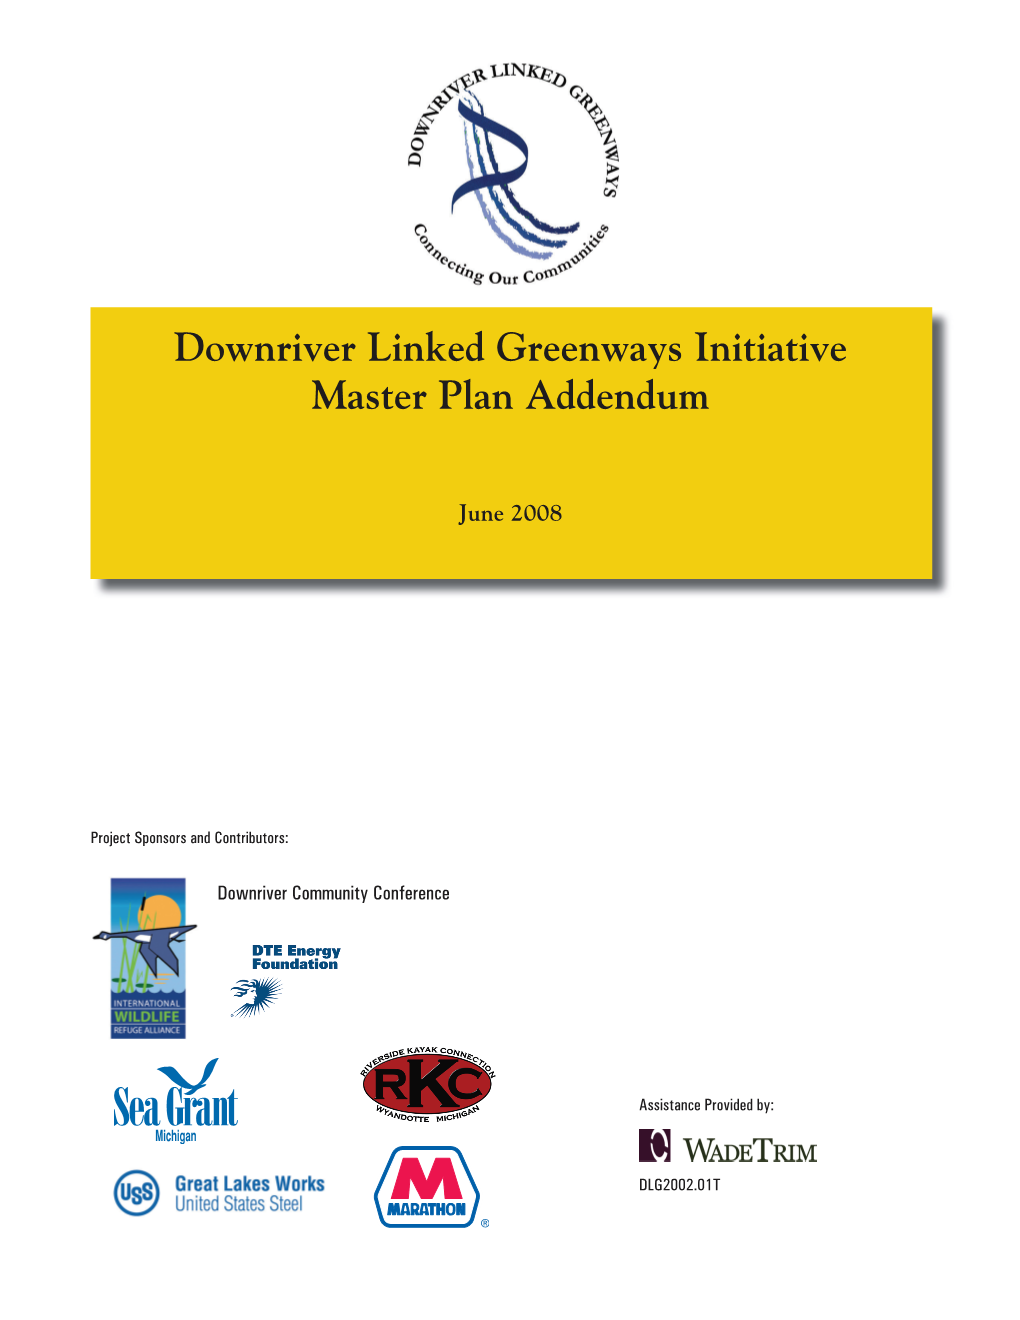 Downriver Linked Greenways Initiative Master Plan Addendum